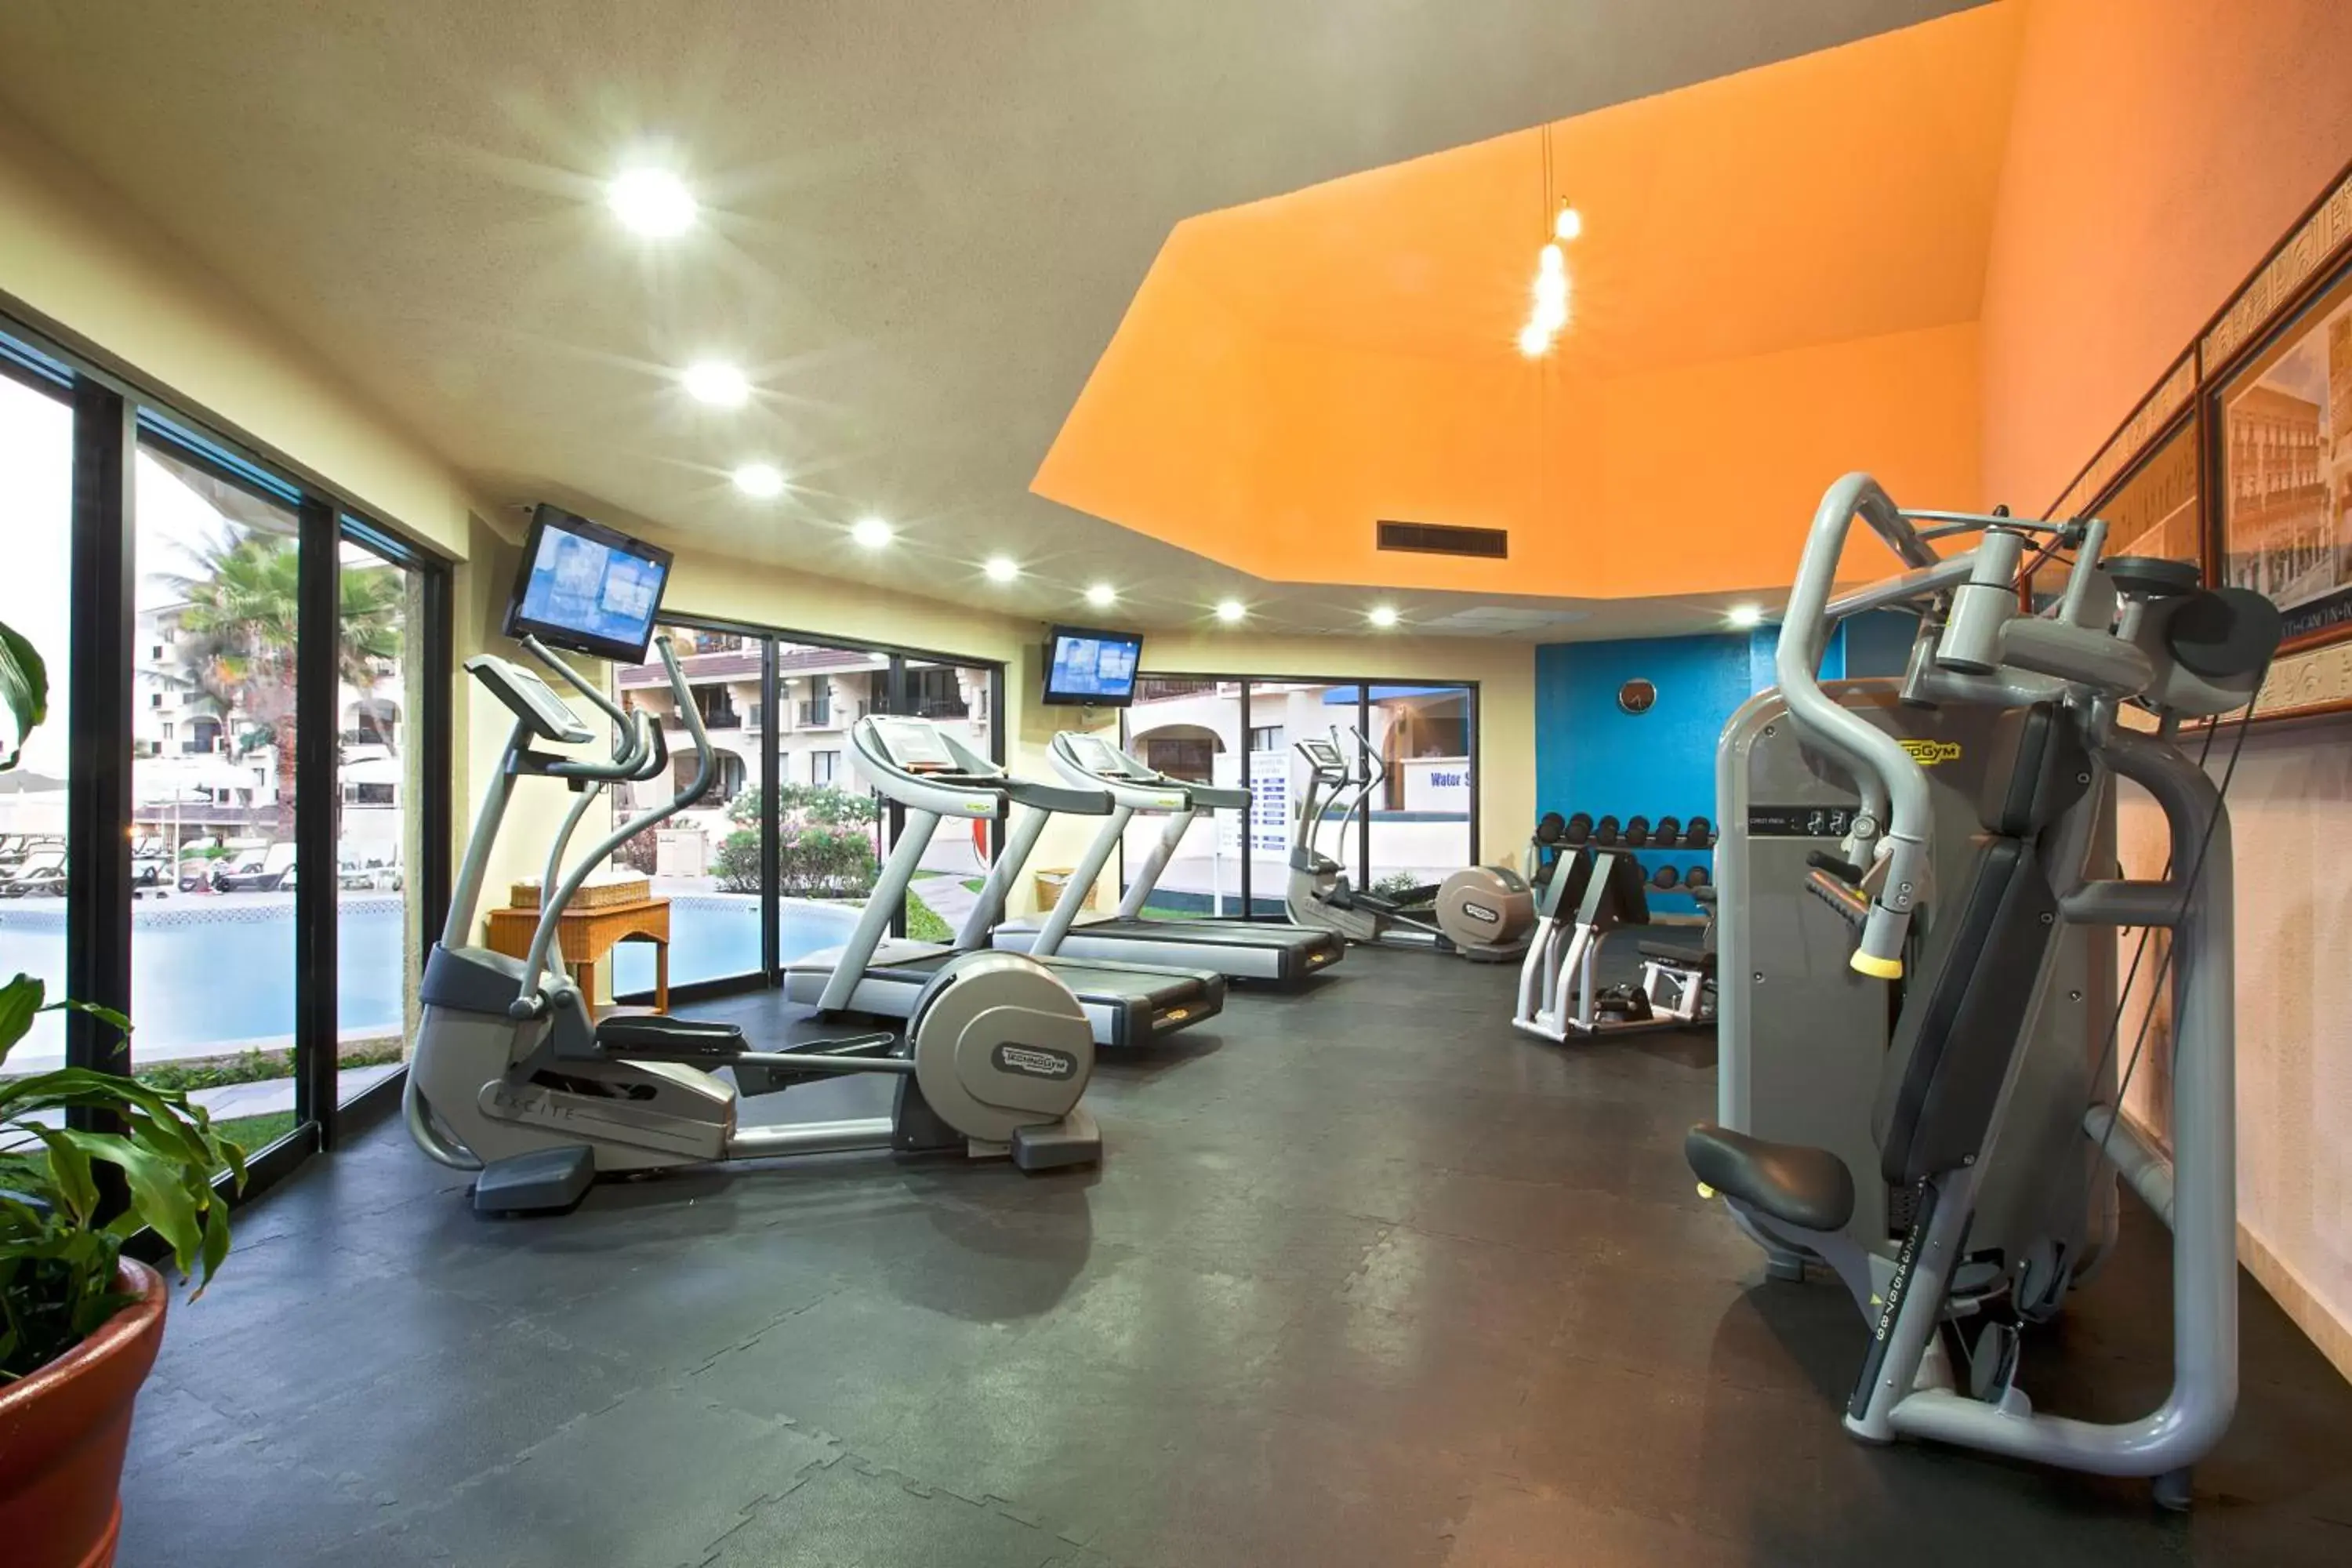 Fitness centre/facilities, Fitness Center/Facilities in Emporio Cancun - Optional All Inclusive